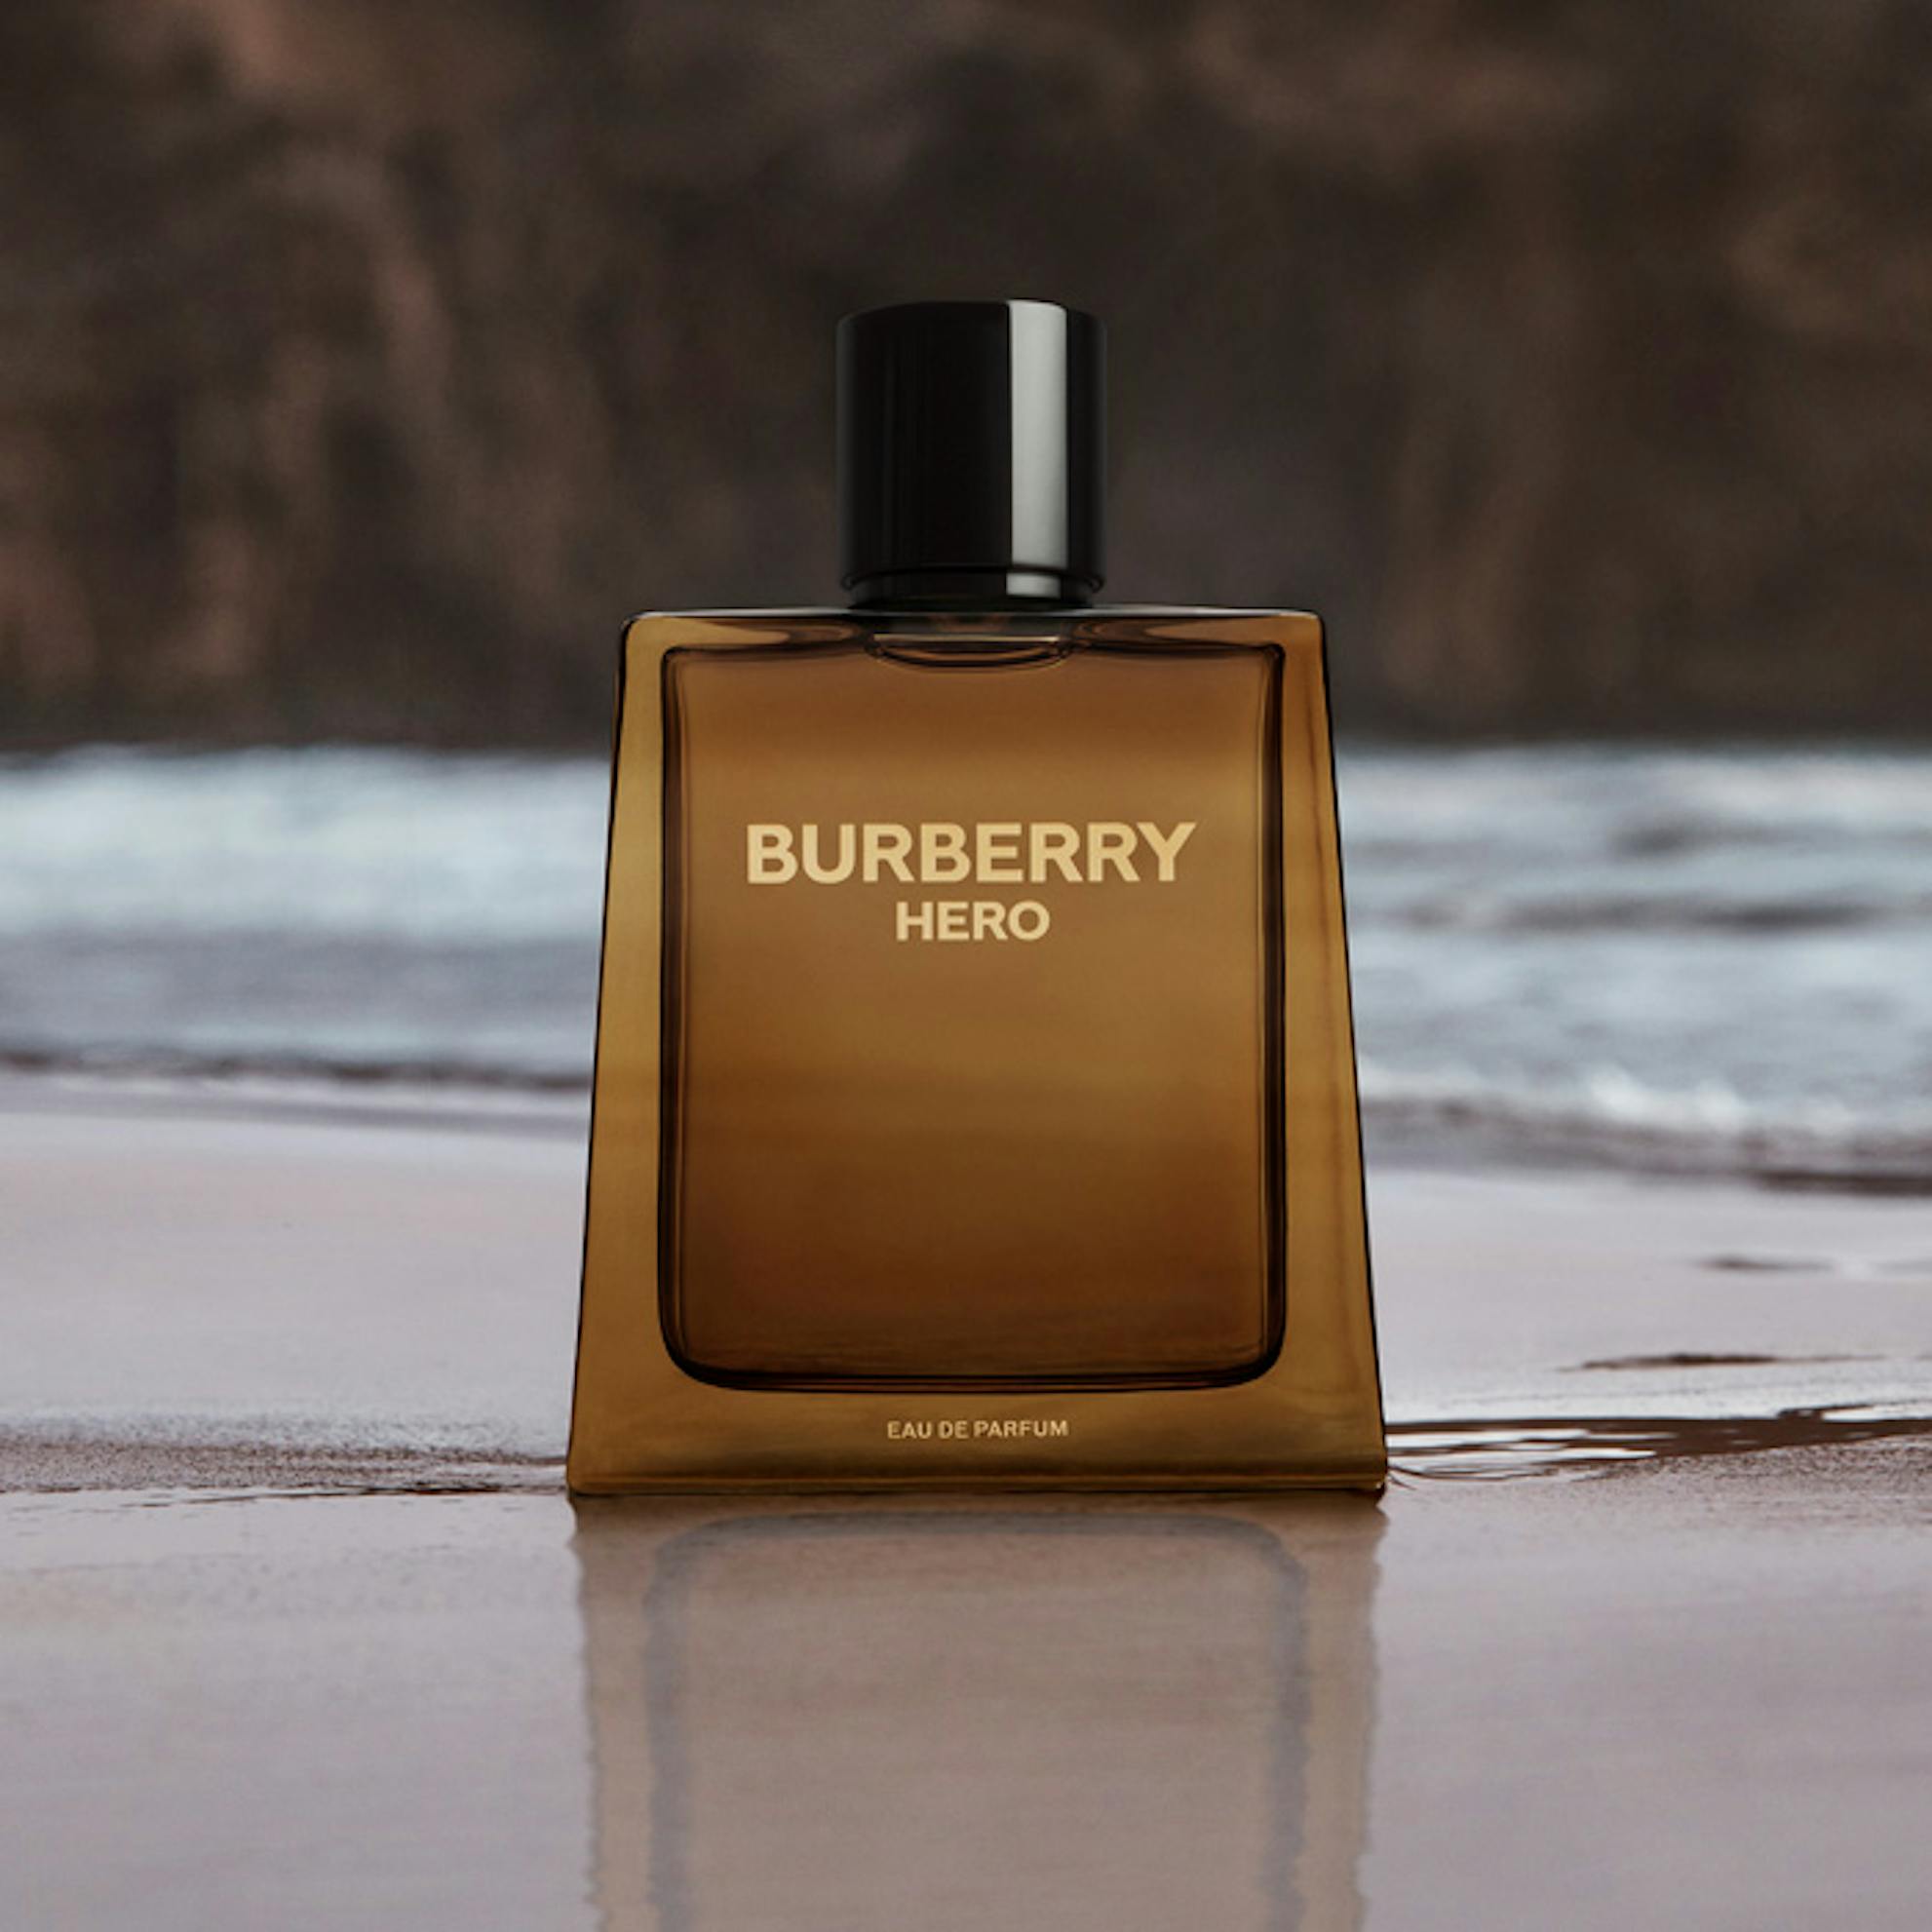 Burberry Hero Eau de Parfum 50ml Spray | The Fragrance Shop